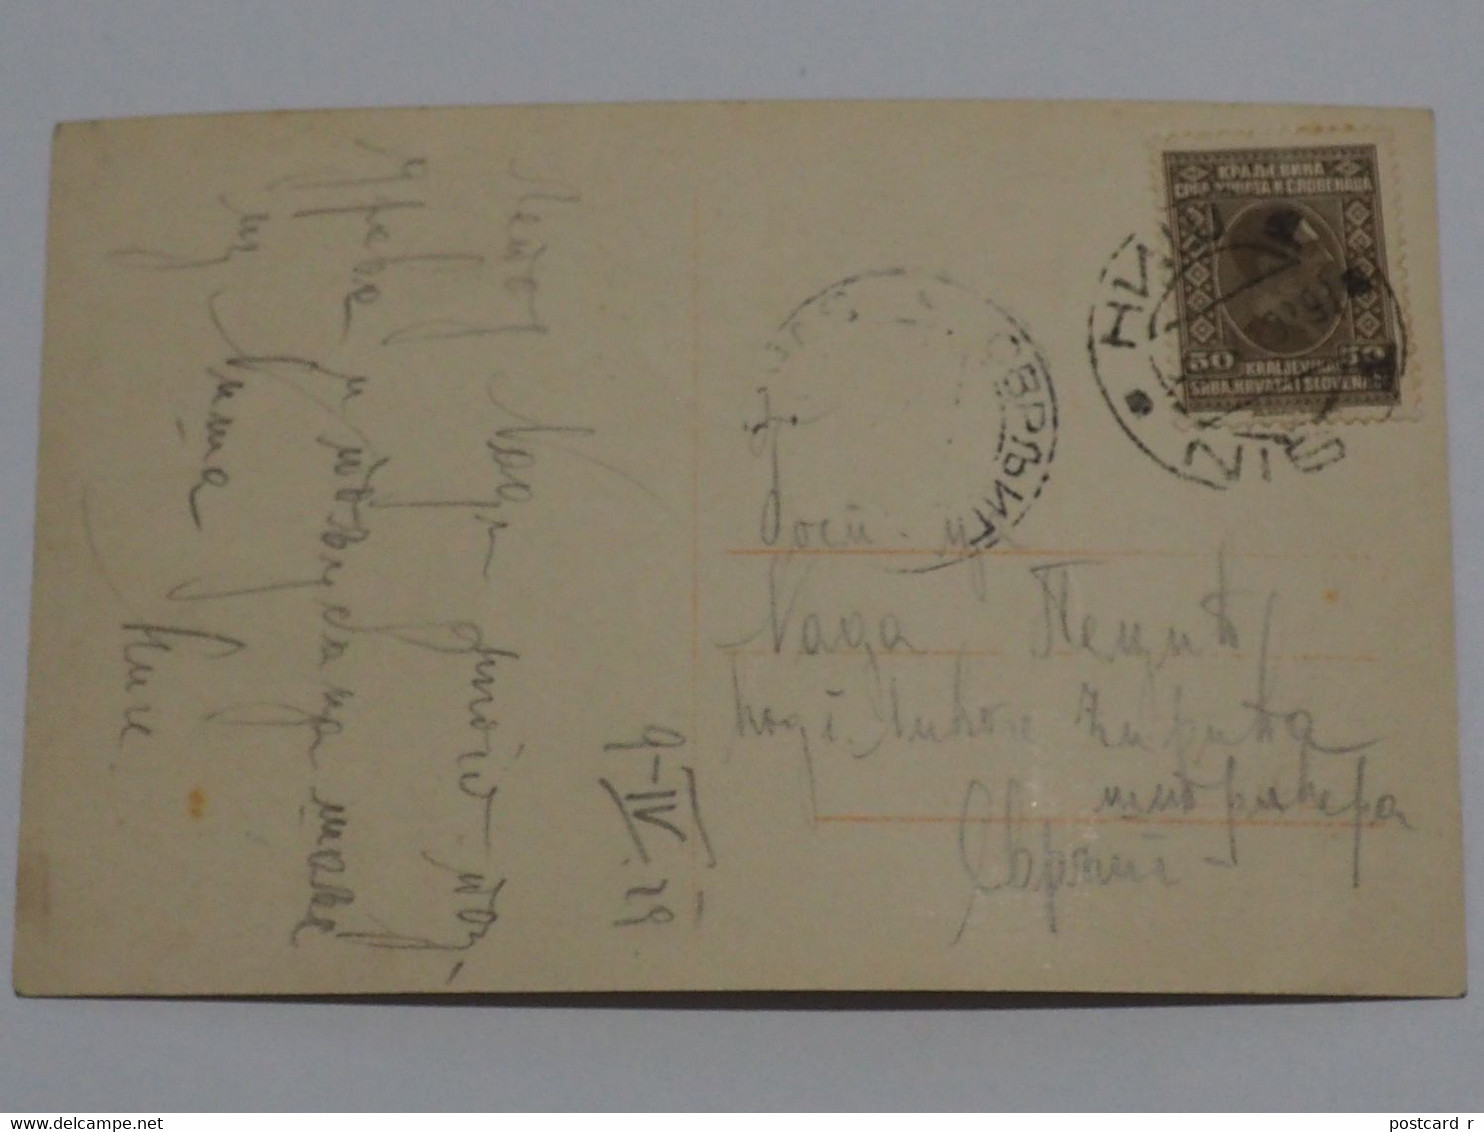 Actor Stefica Vidacic  Stamp 1928 A 216 - Künstler